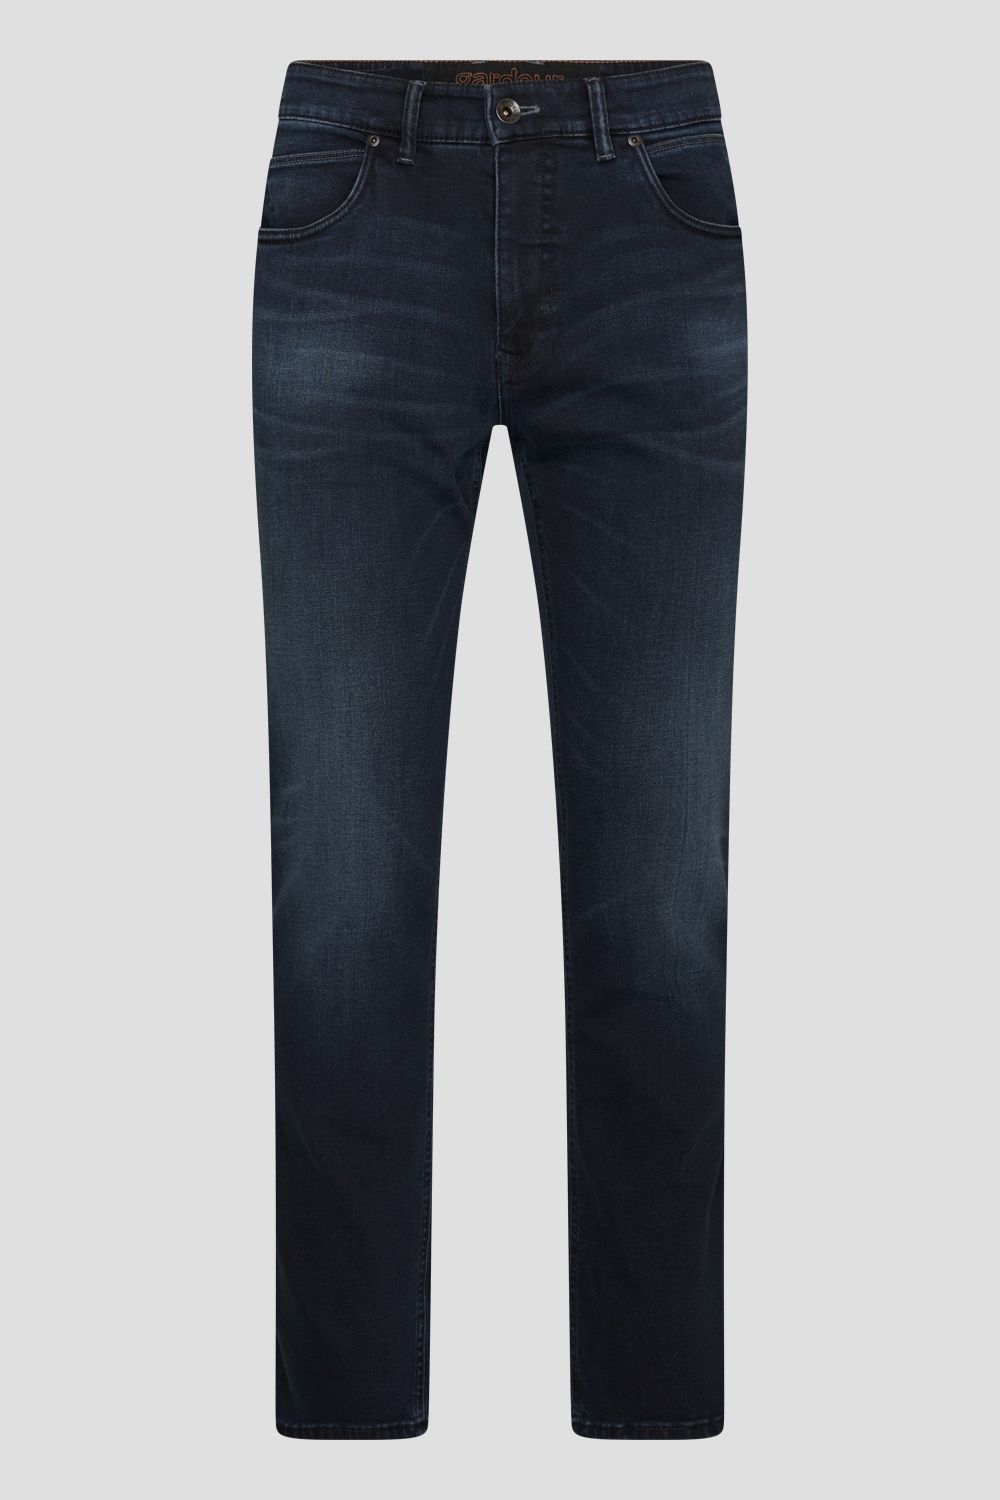 Gardeur - Bennet Modern Fit 5-Pocket Jeans Dark Rinse Used - 32/32 - Heren